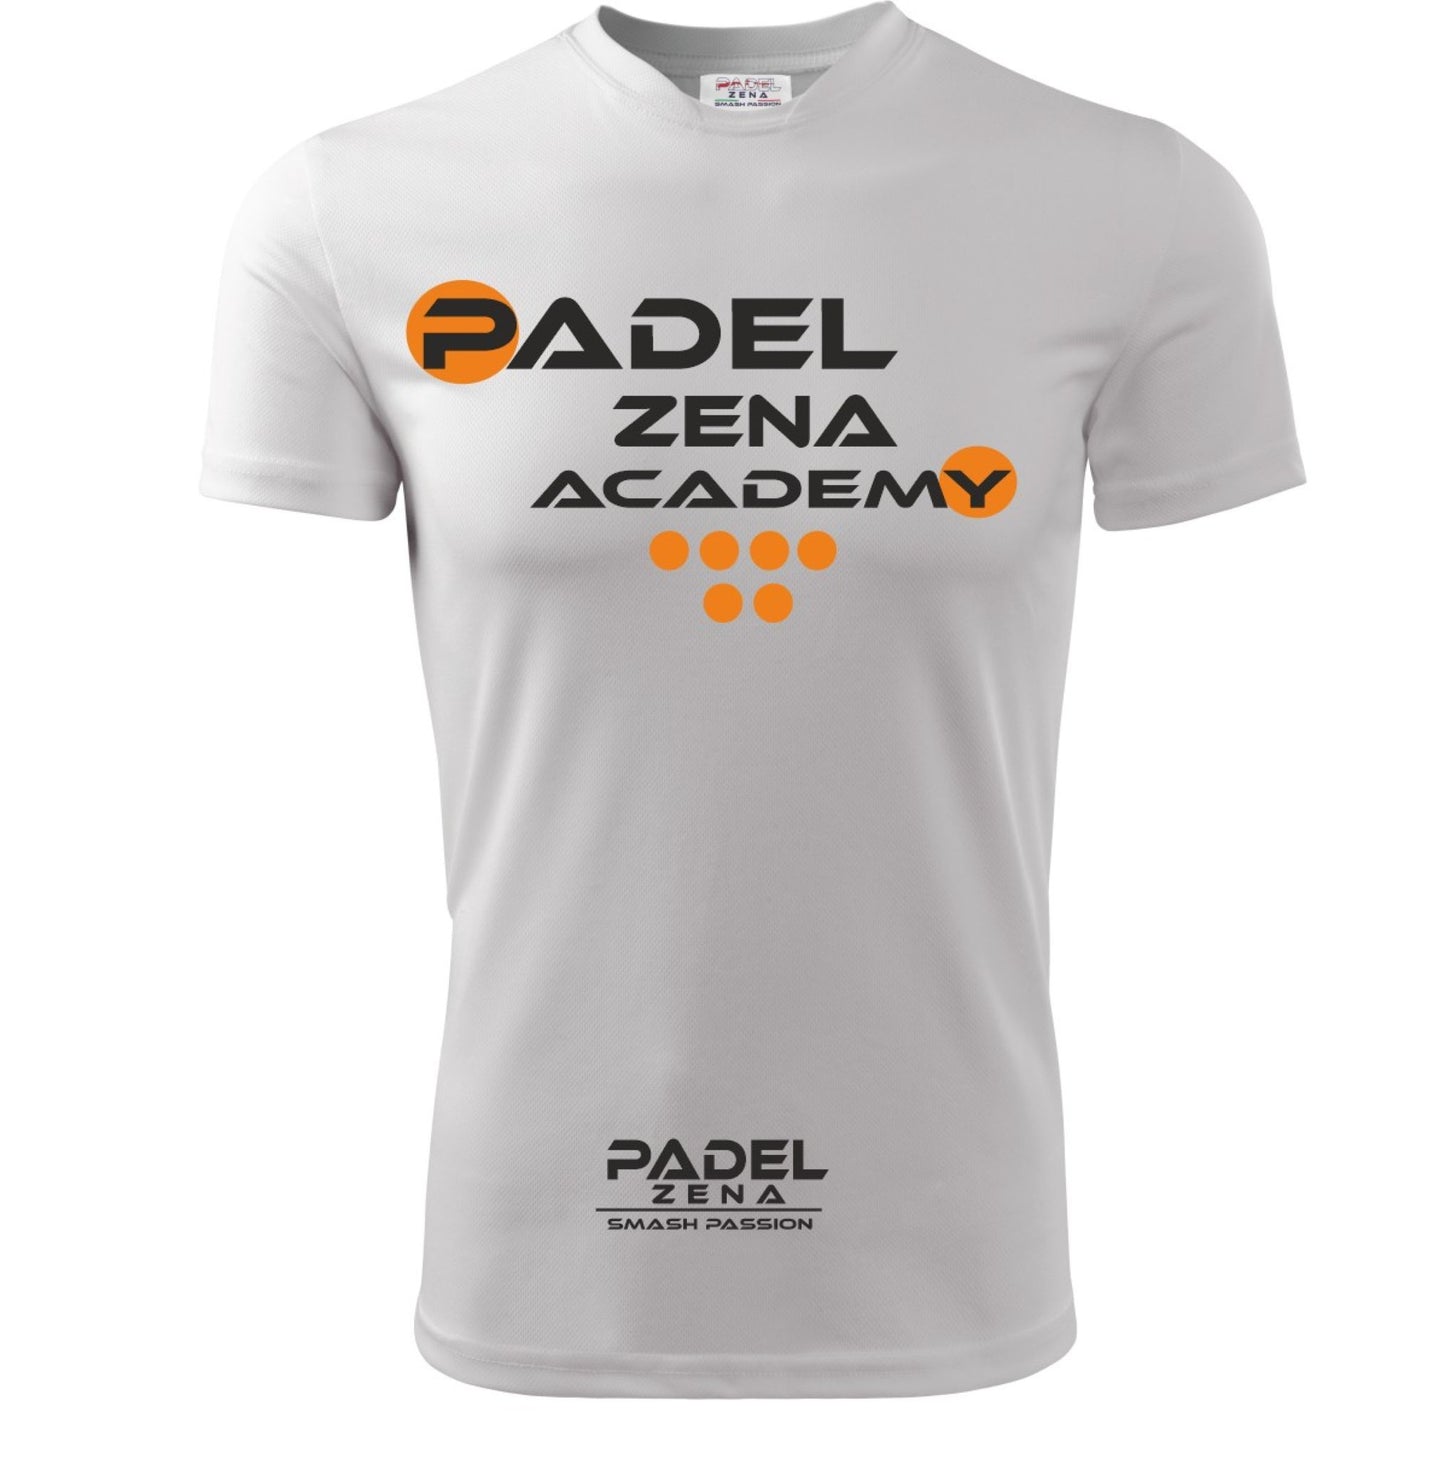 Padel Academy